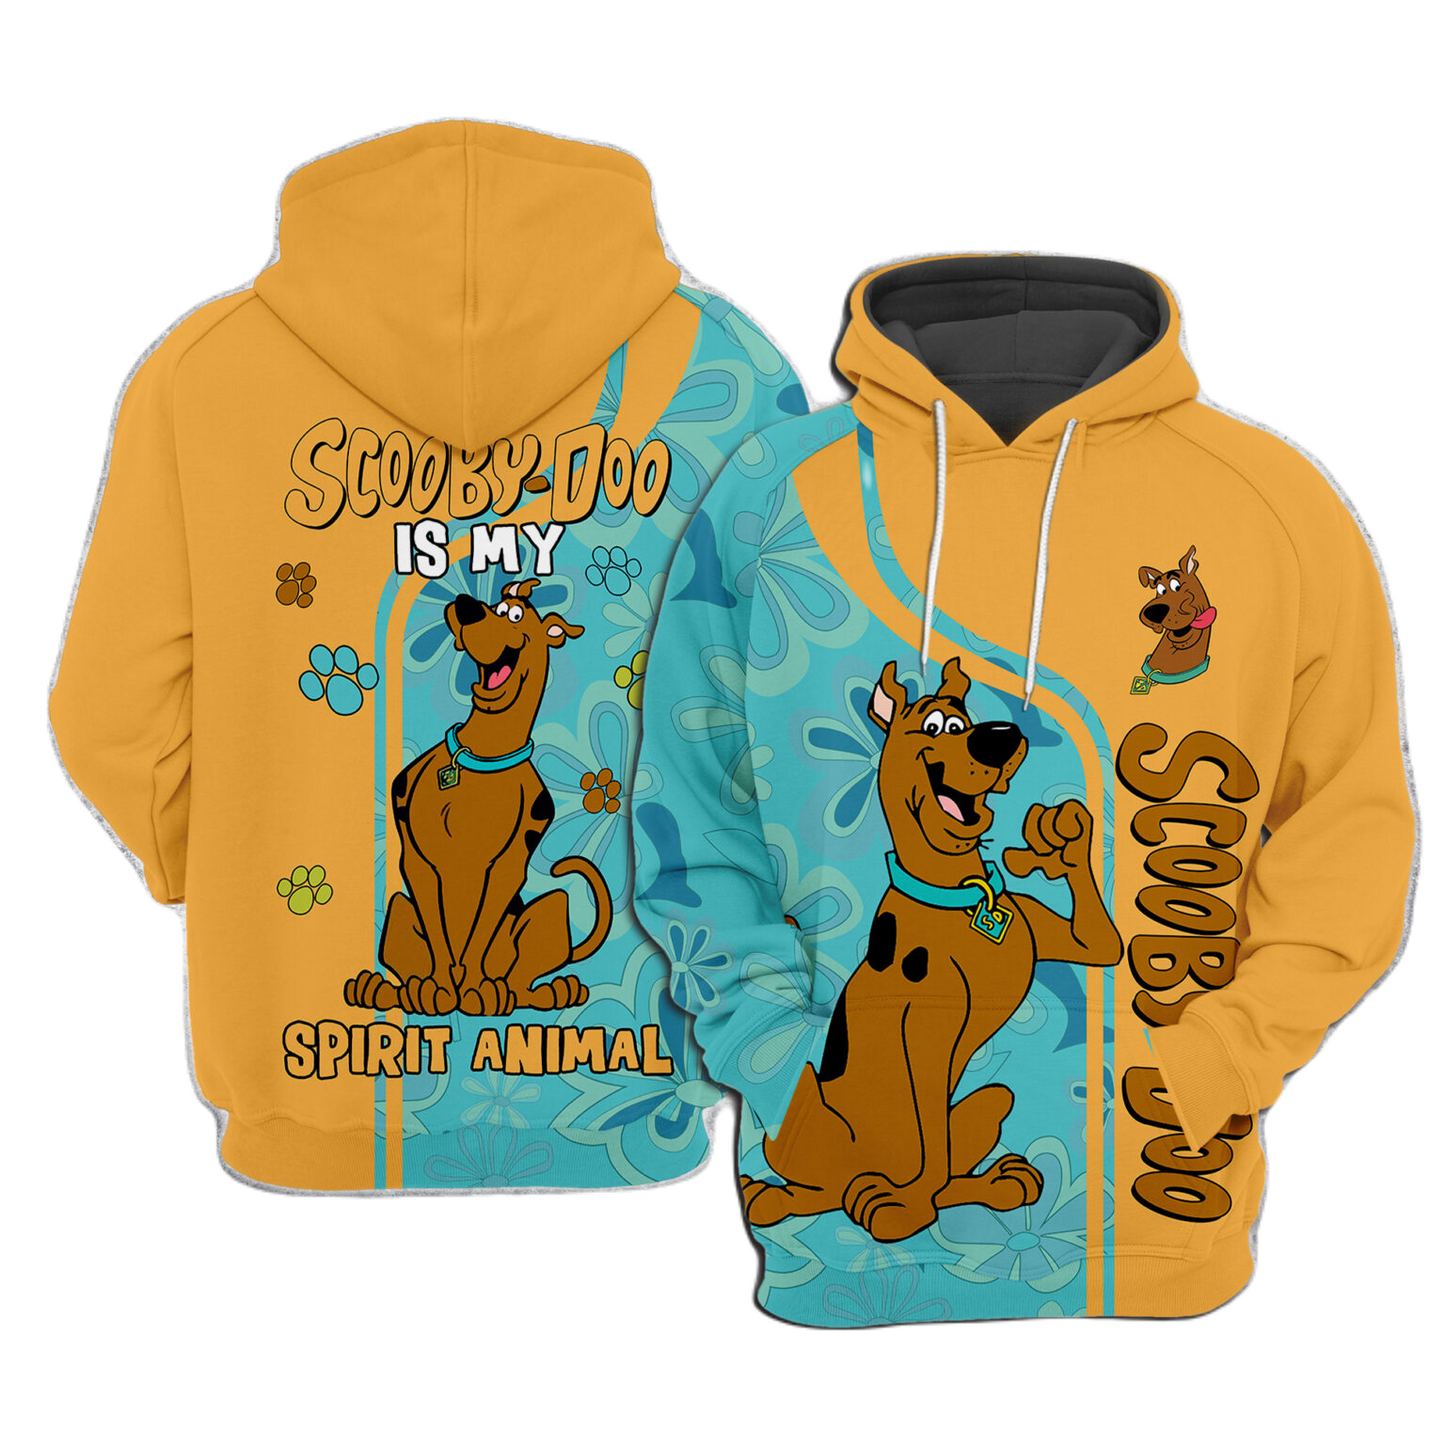 Scooby Doo Hoodie Scooby Doo Is My Spirit Animal Hoodie Blue Orange Unisex